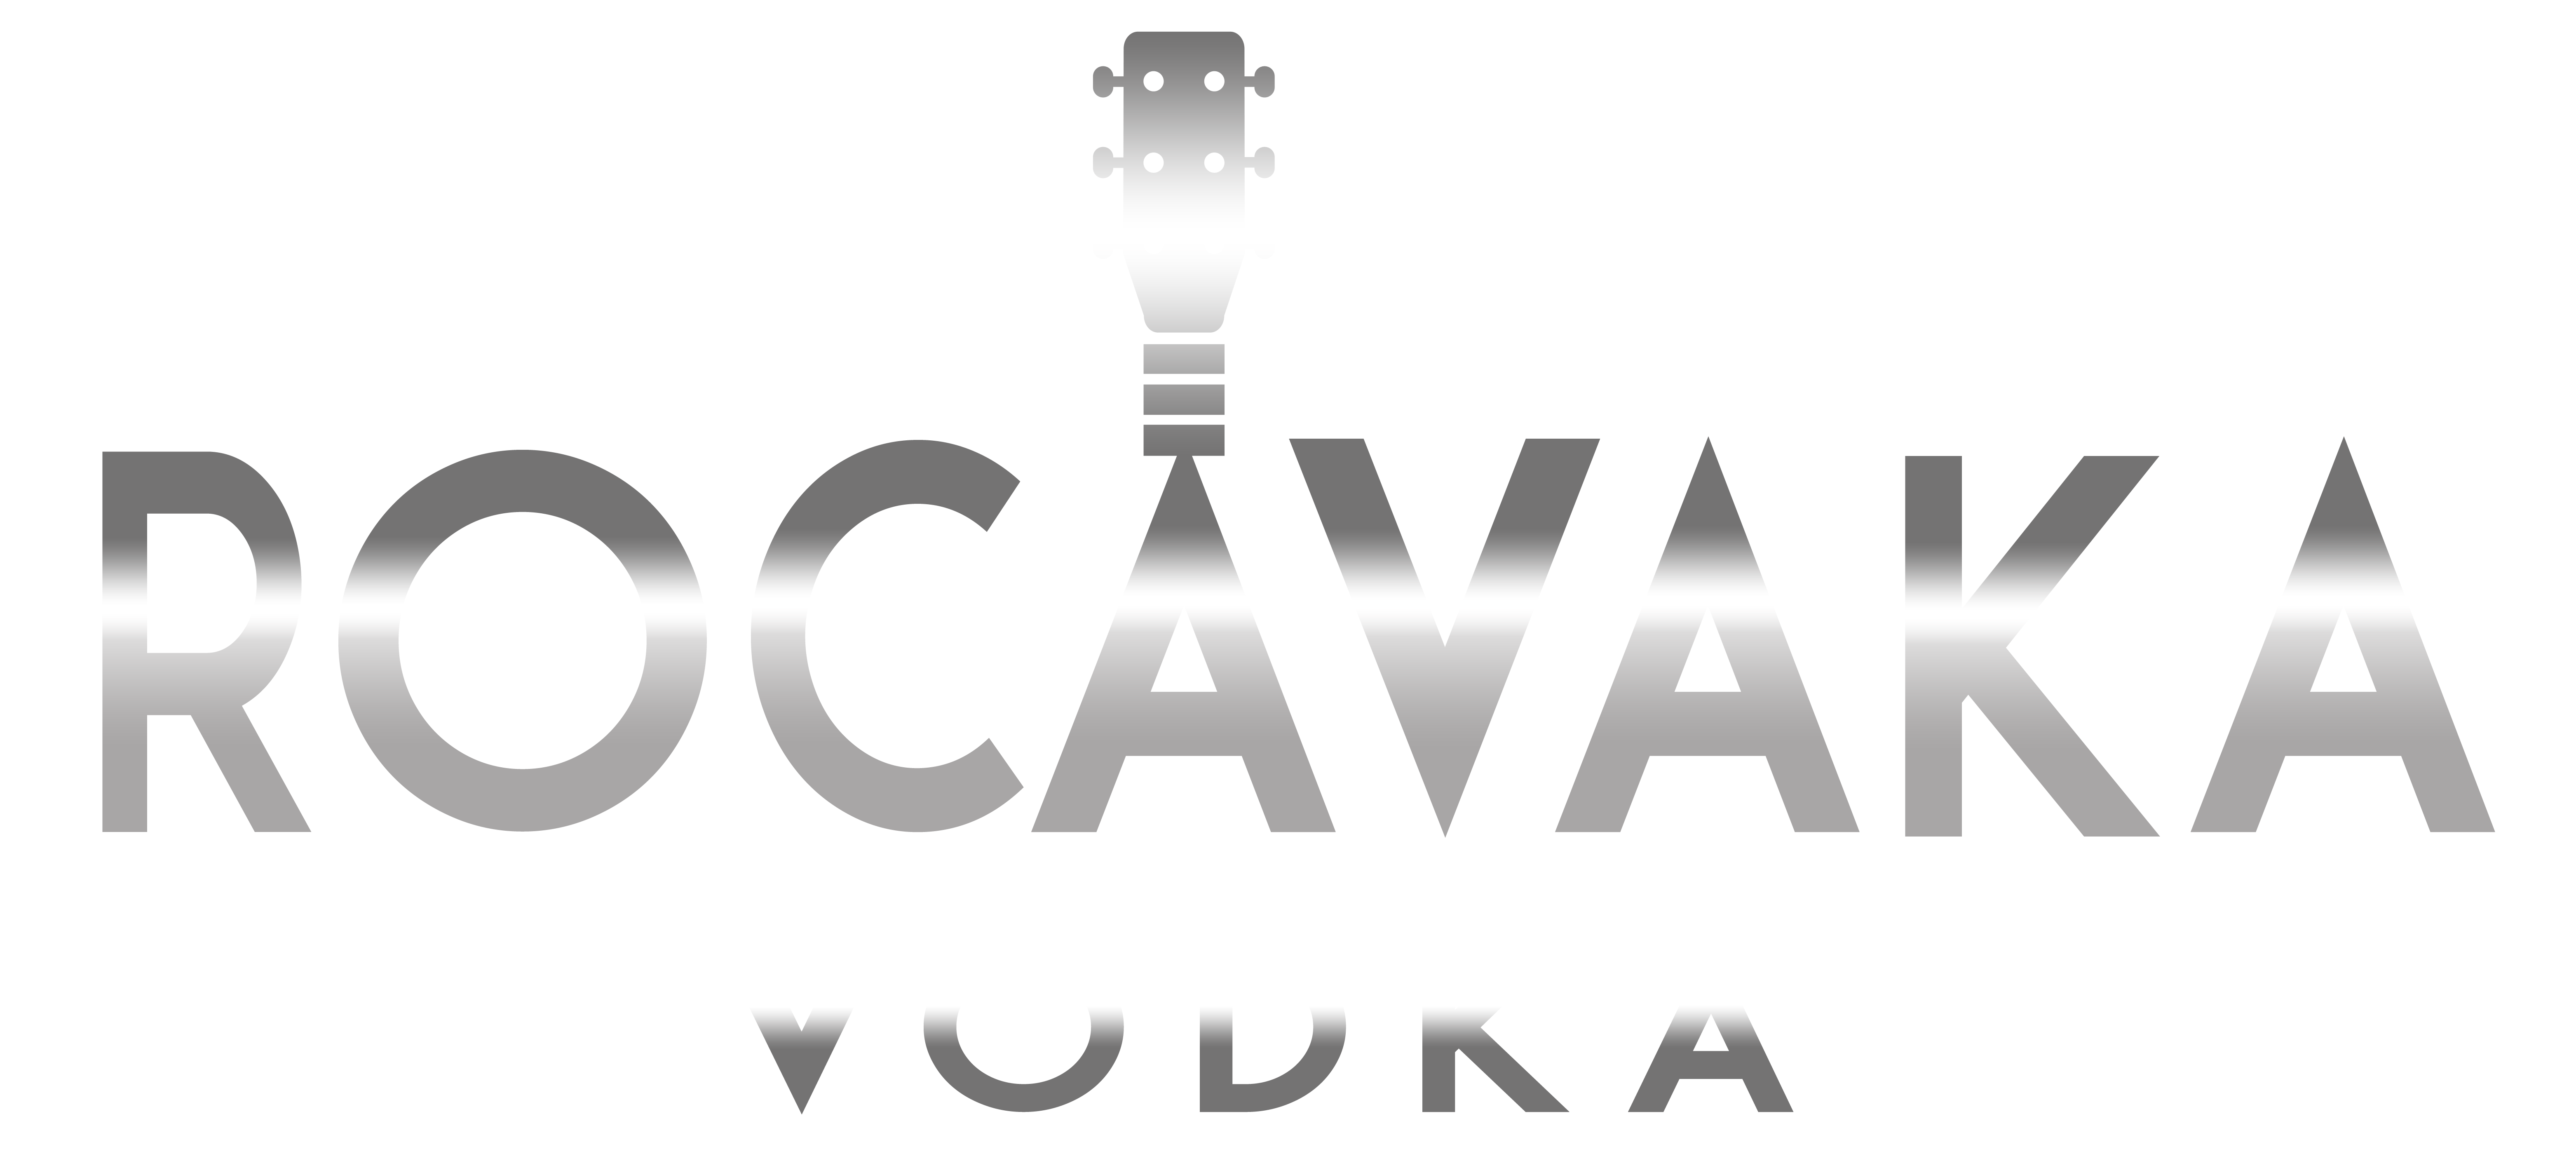 Rockavaka Vodka